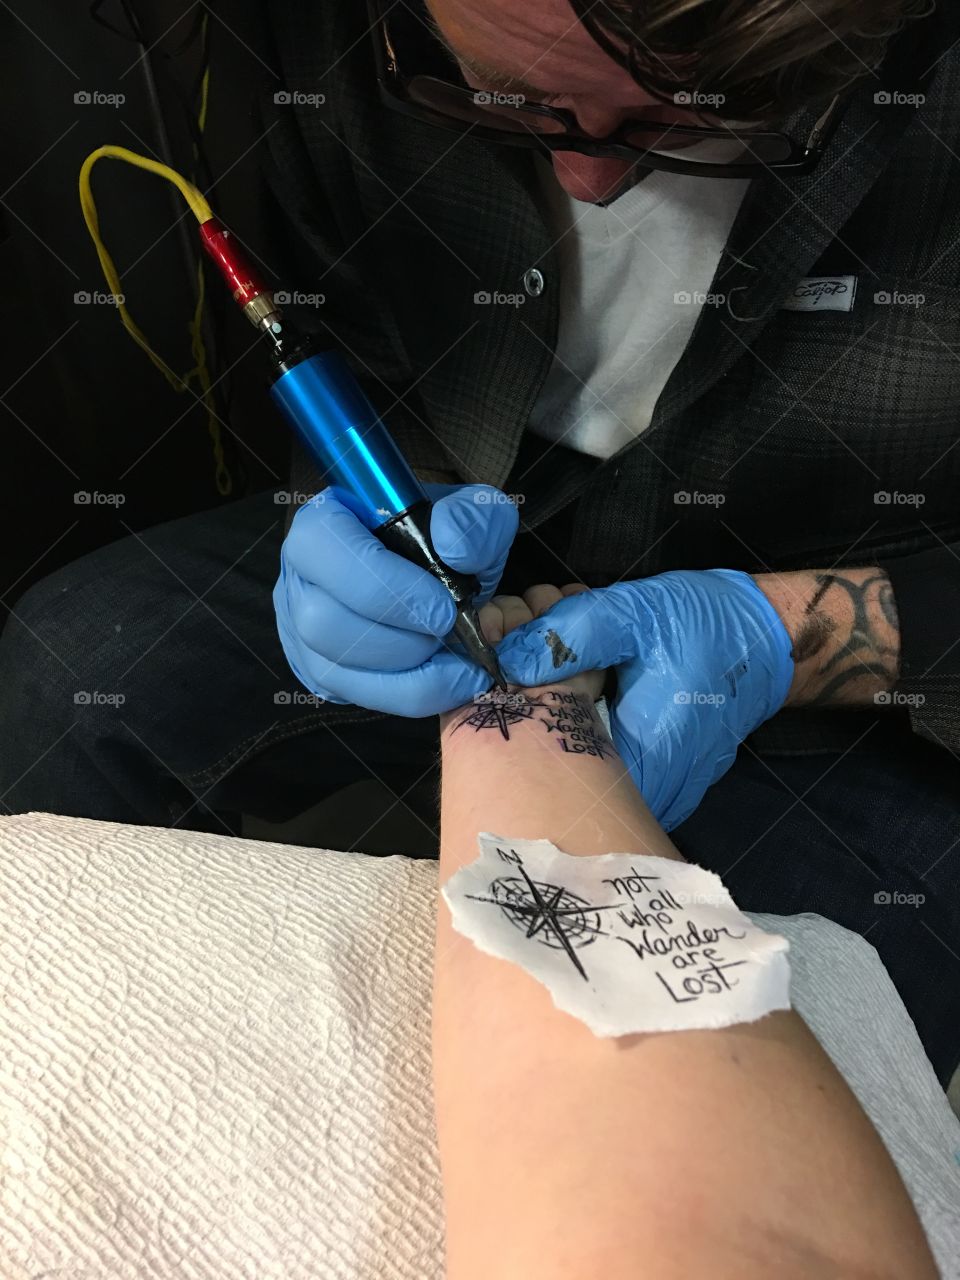 Tattoo getting done